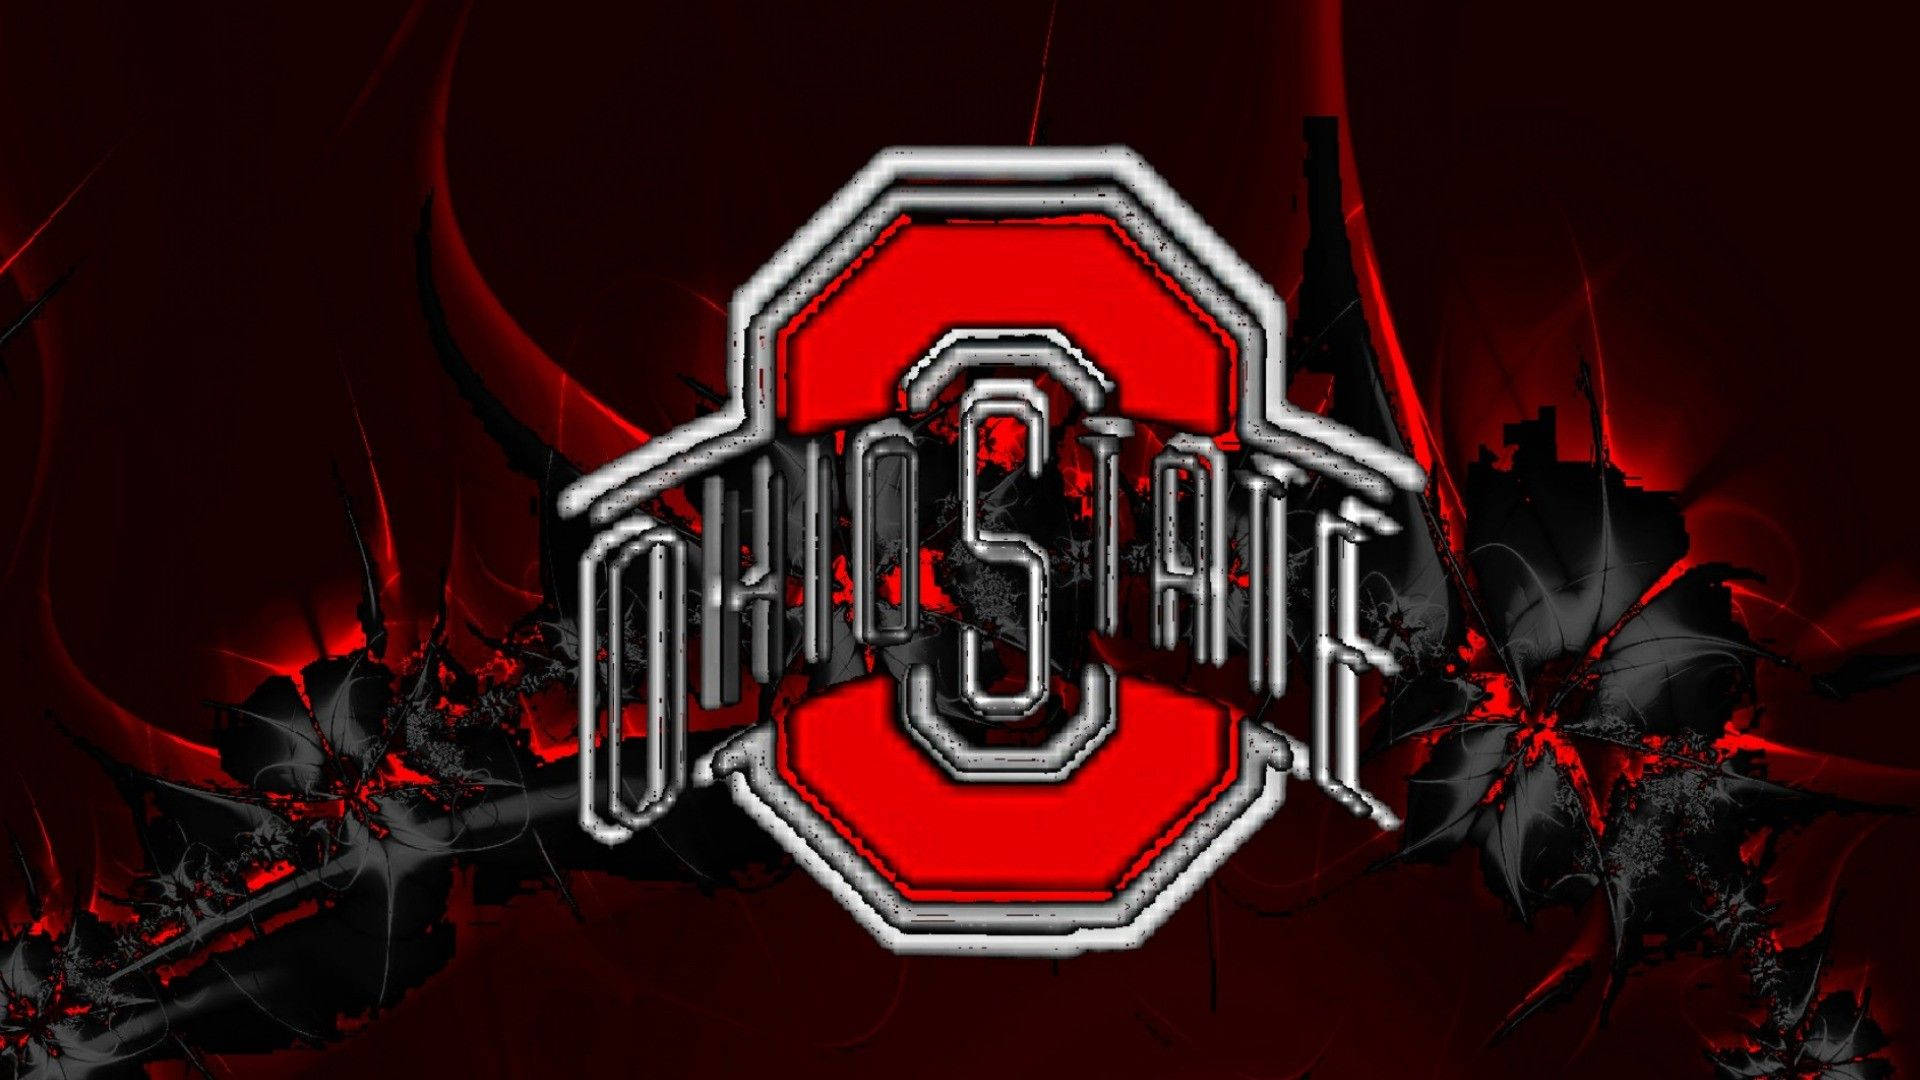 Stunning Ohio State Logo Wallpaper